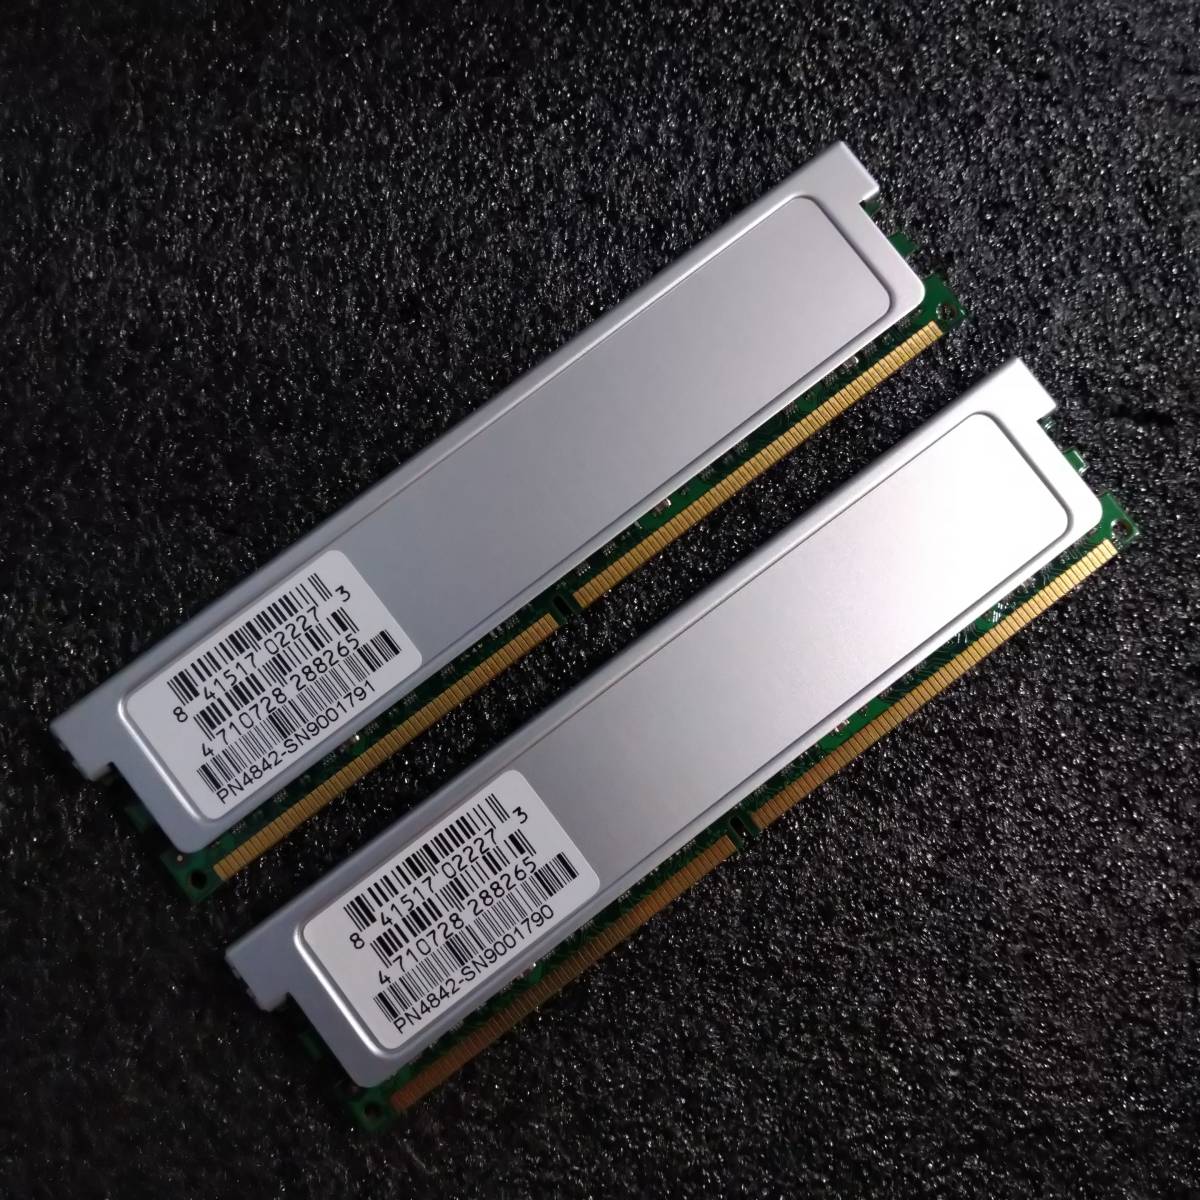 【中古】DDR2メモリ 4GB(2GB2枚組) GEIL GX24GB6400DC [DDR2-800 PC2-6400]_画像2